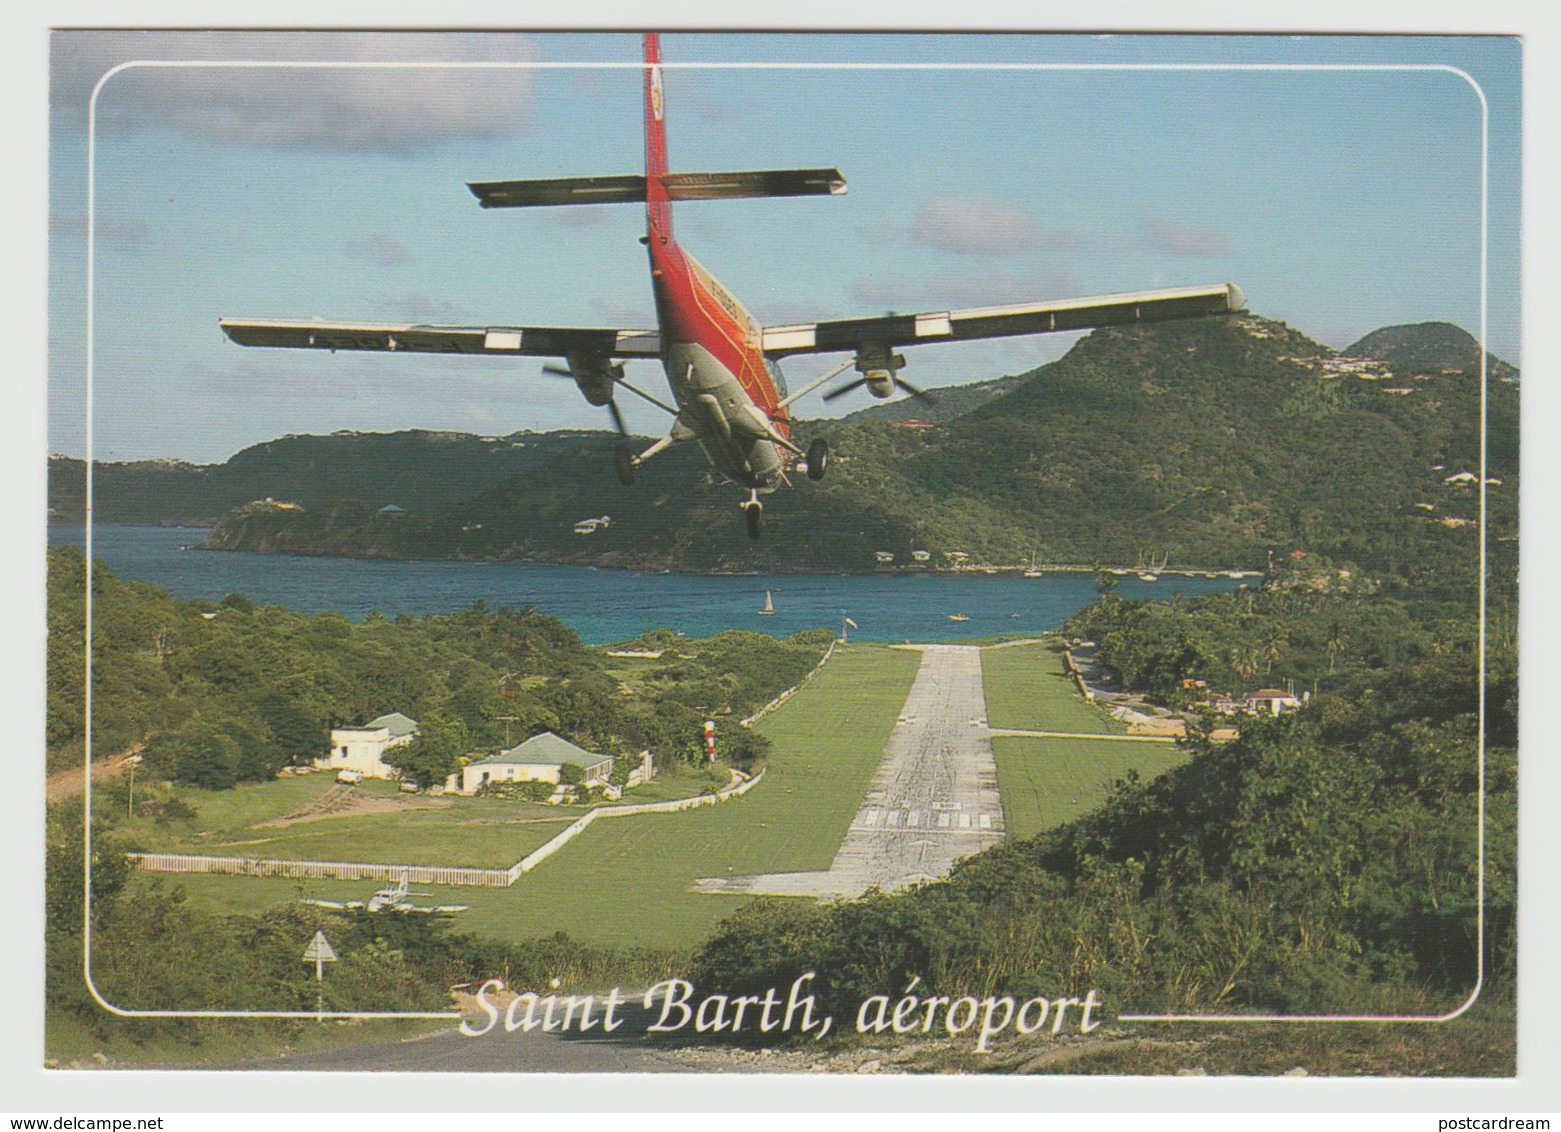 Saint-Barth Aerial View Airport Postcard Netherland Antilles Guadeloupe, Saint-Martin, AEROPORT Saint Jean - Saint-Martin